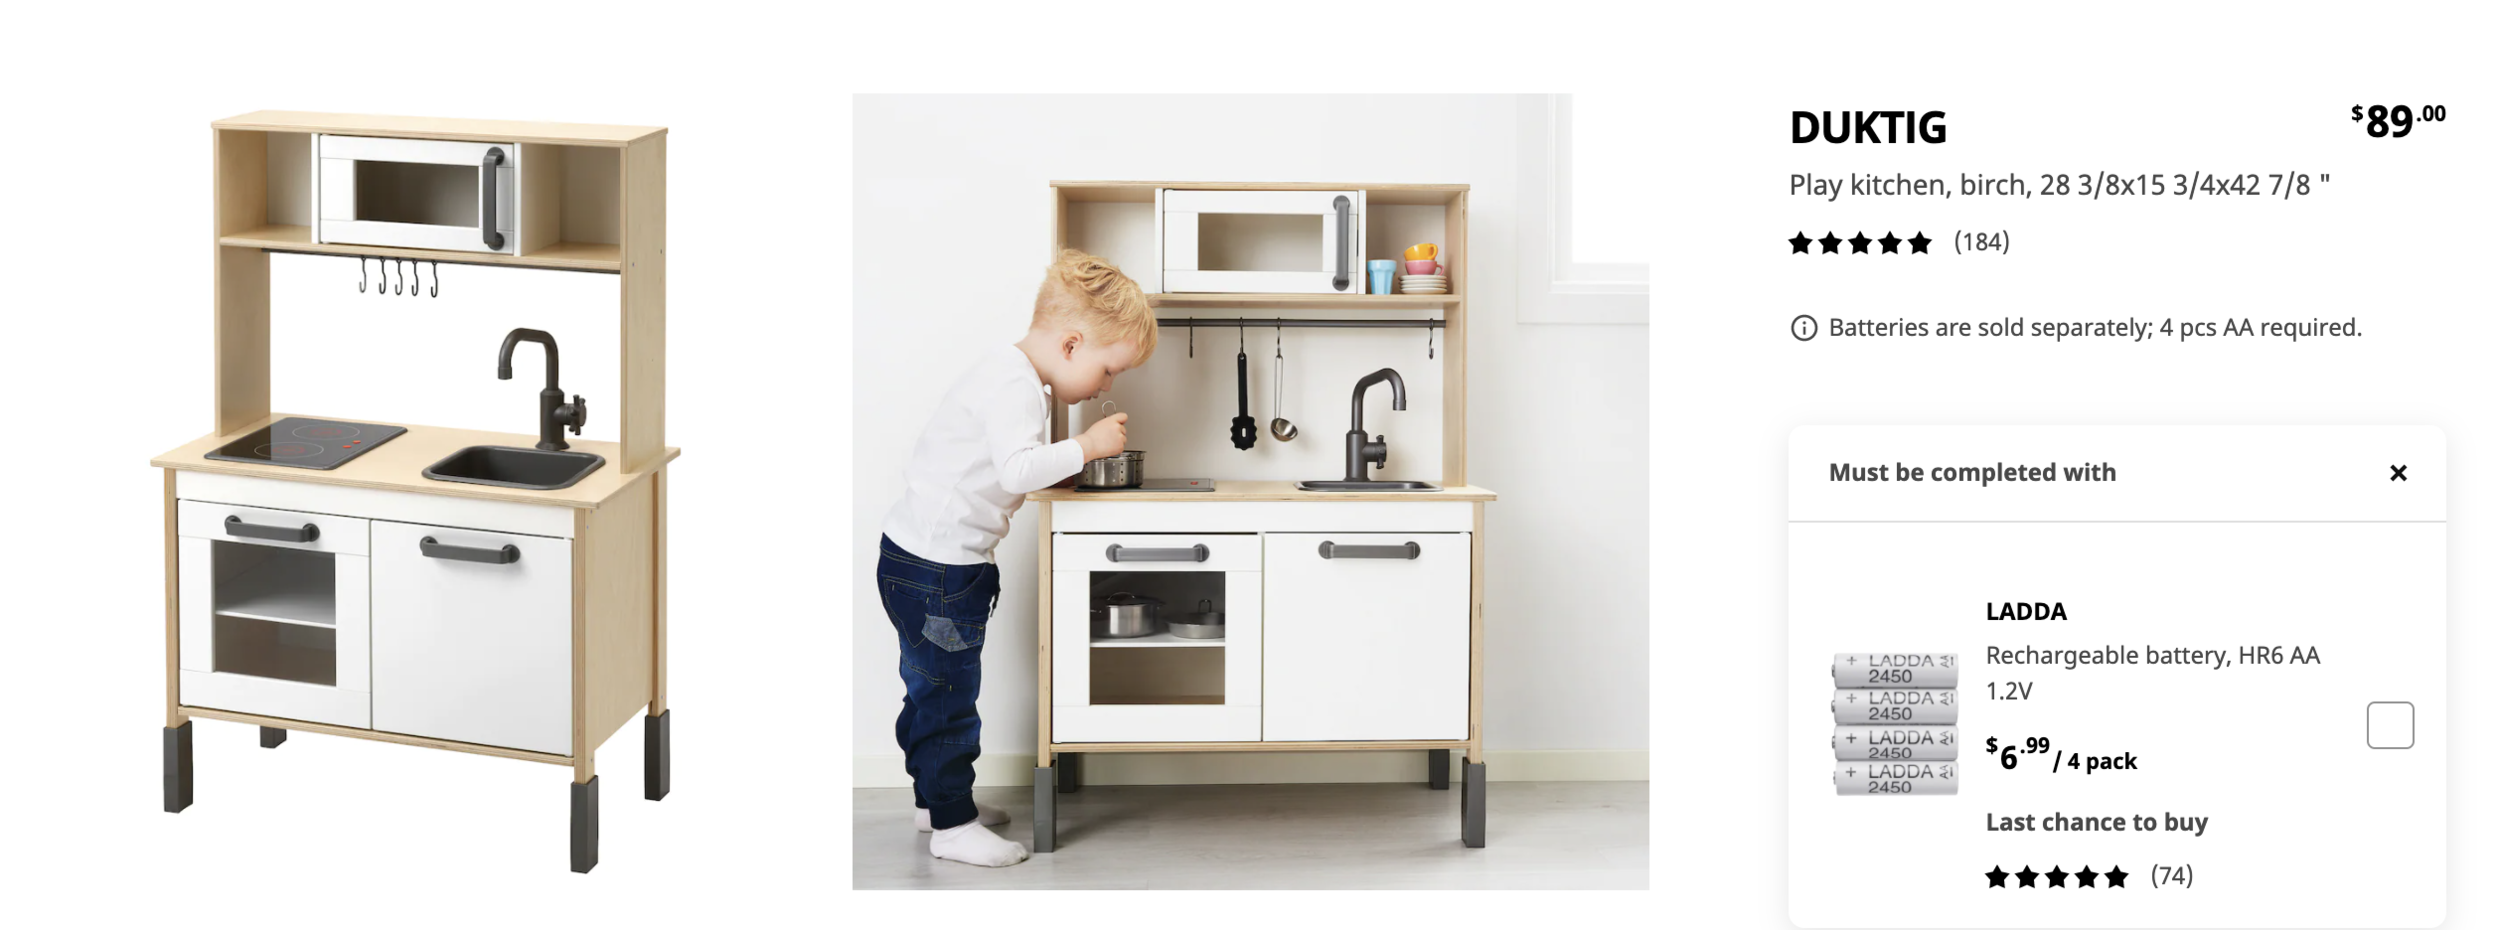 DUKTIG Play kitchen, birch, 28 3/8x15 3/4x42 7/8 - IKEA